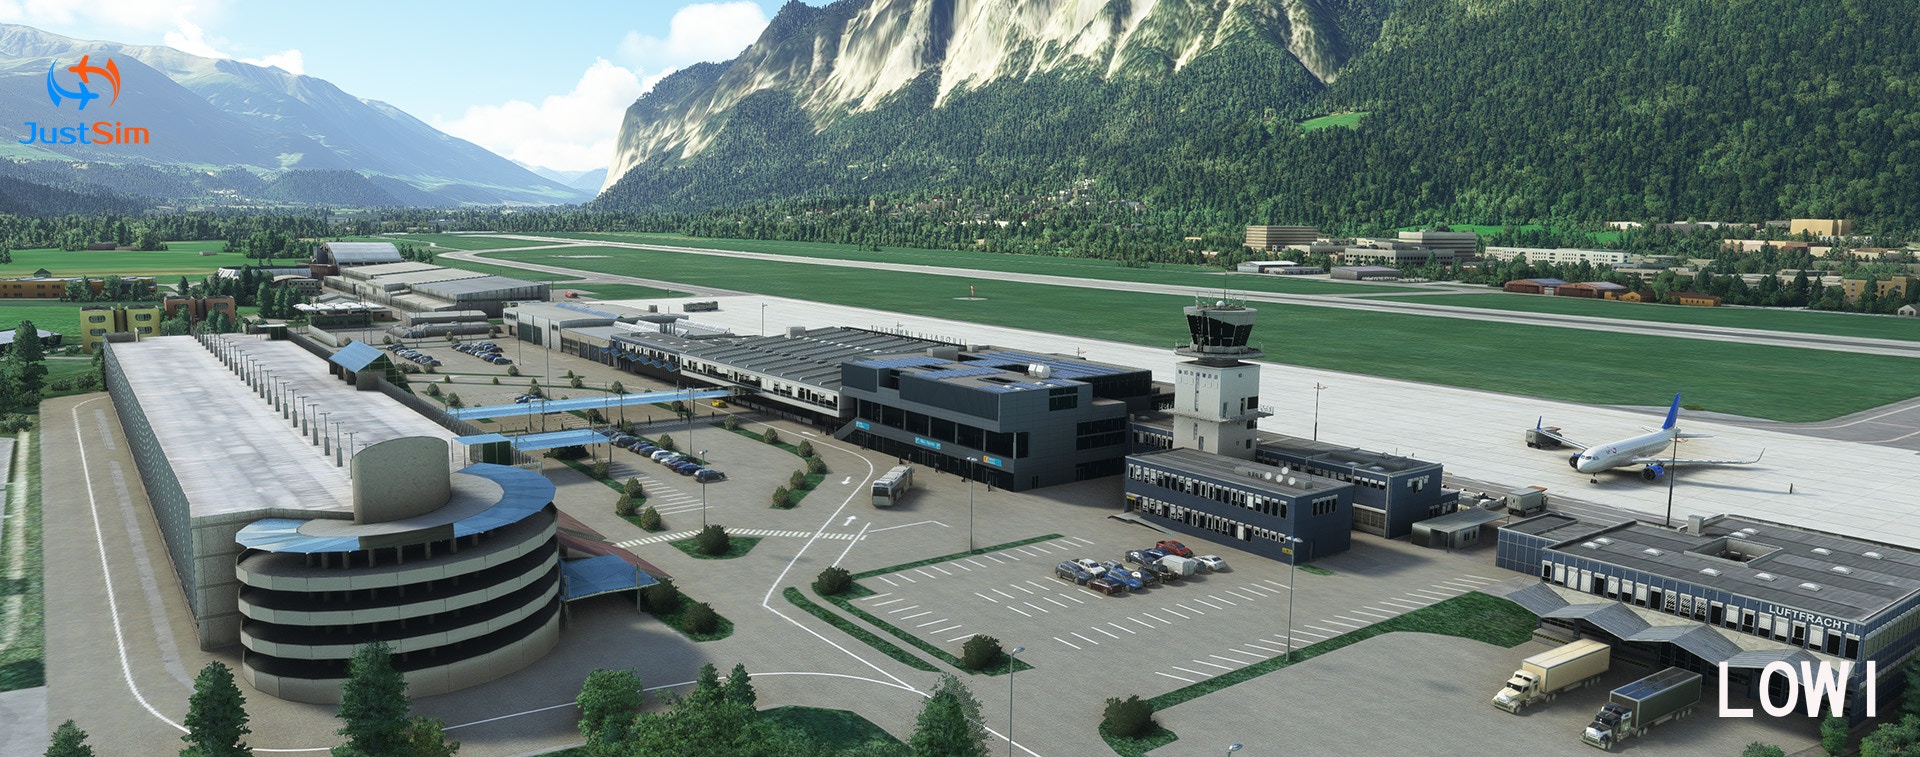 JustSim Releases Innsbruck Airport for MSFS